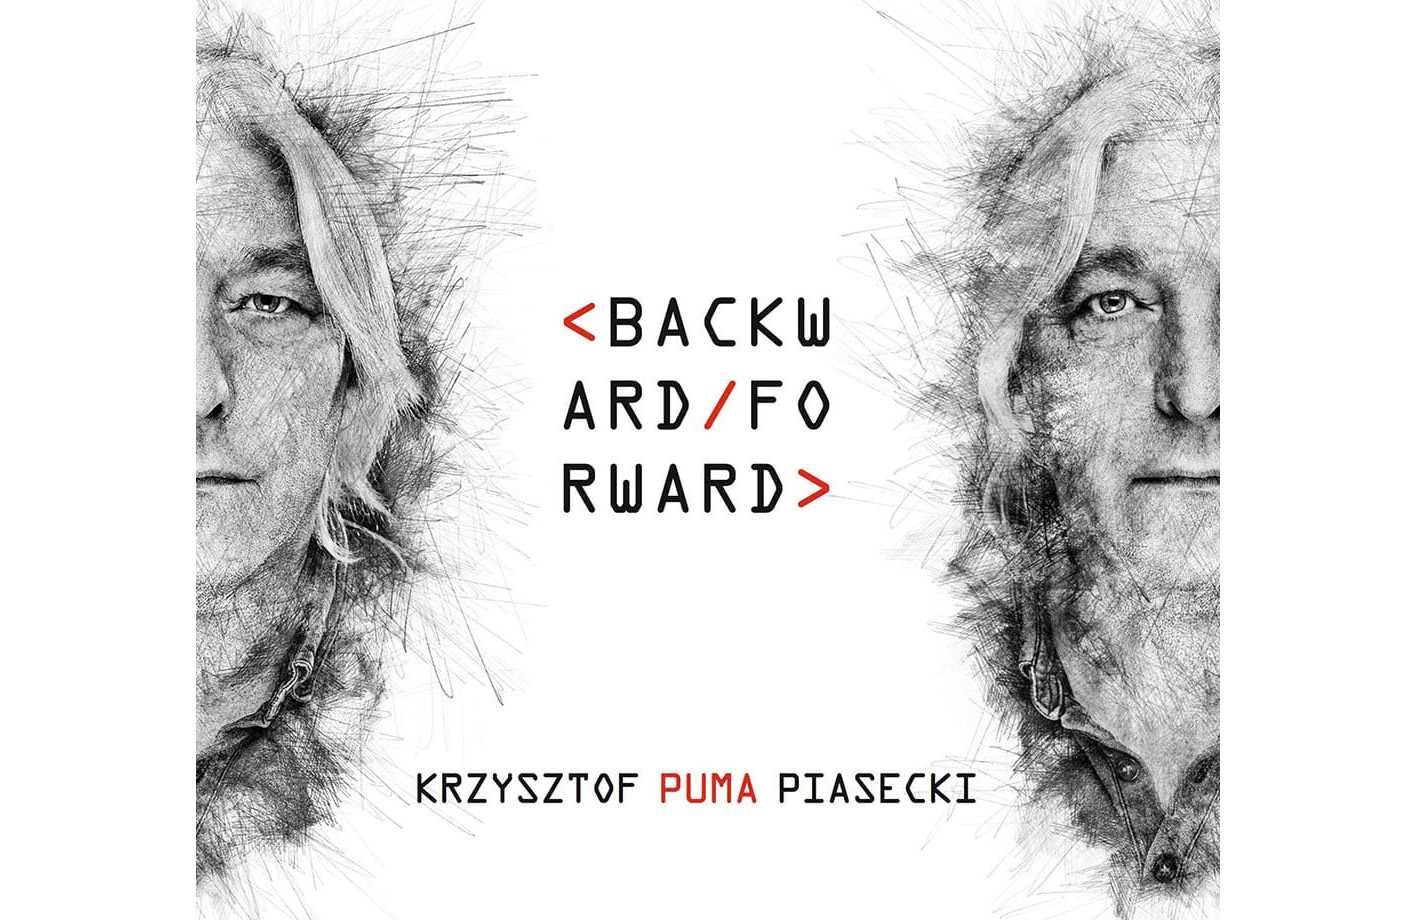 CD Krzysztof "Puma" Piasecki - Backward / Forward